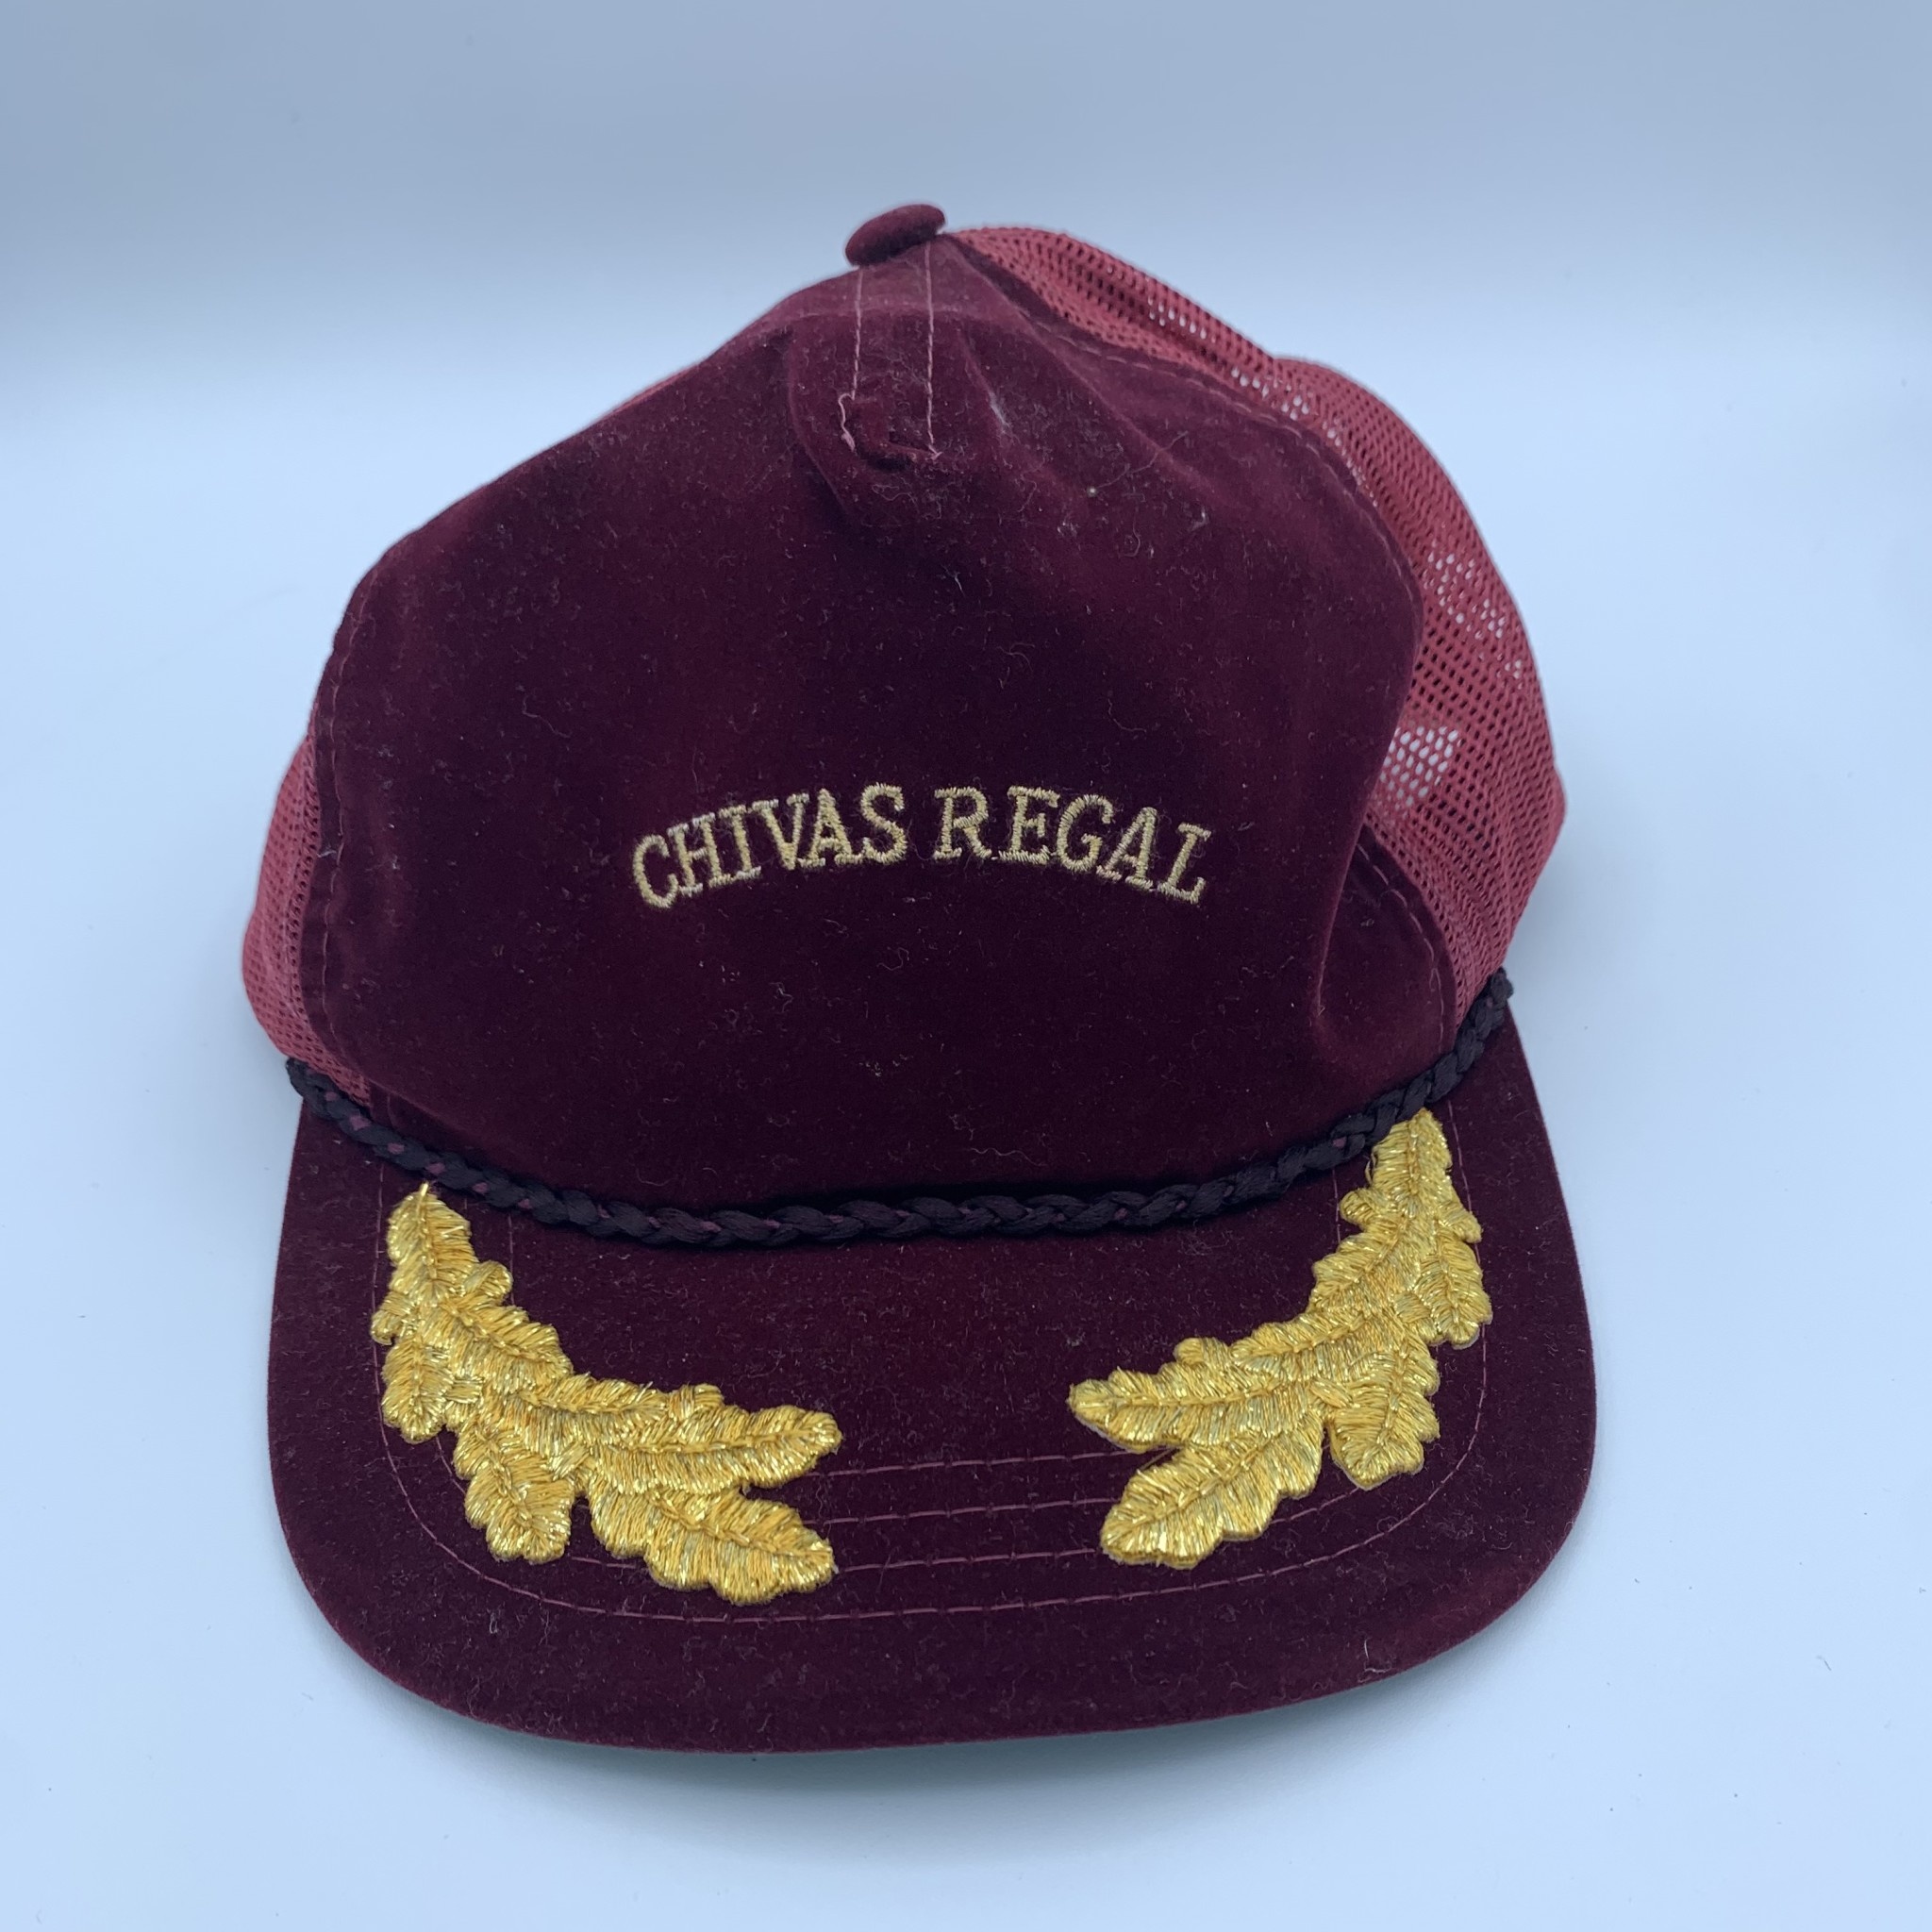 Mission Zero Vintage Chivas Regal Hat - Alakoko Shop